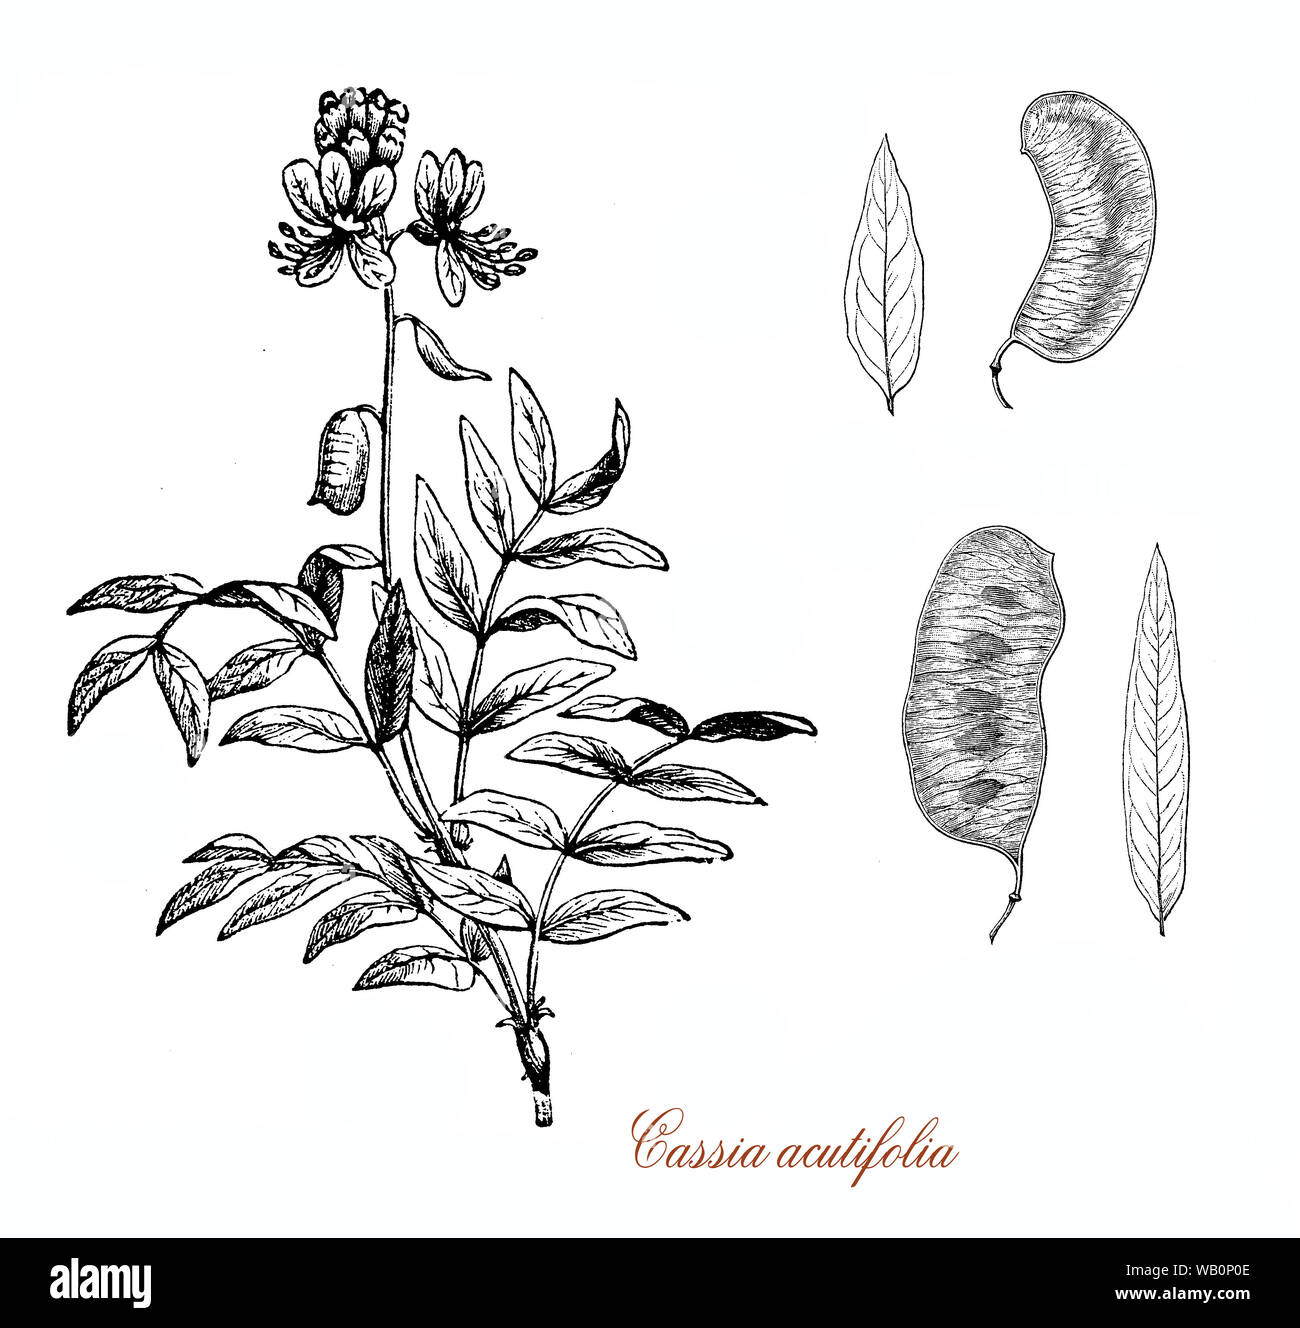 Cassia acutifolia or Senna alexandrina native to Africa used in herbal medicine as laxative Stock Photo